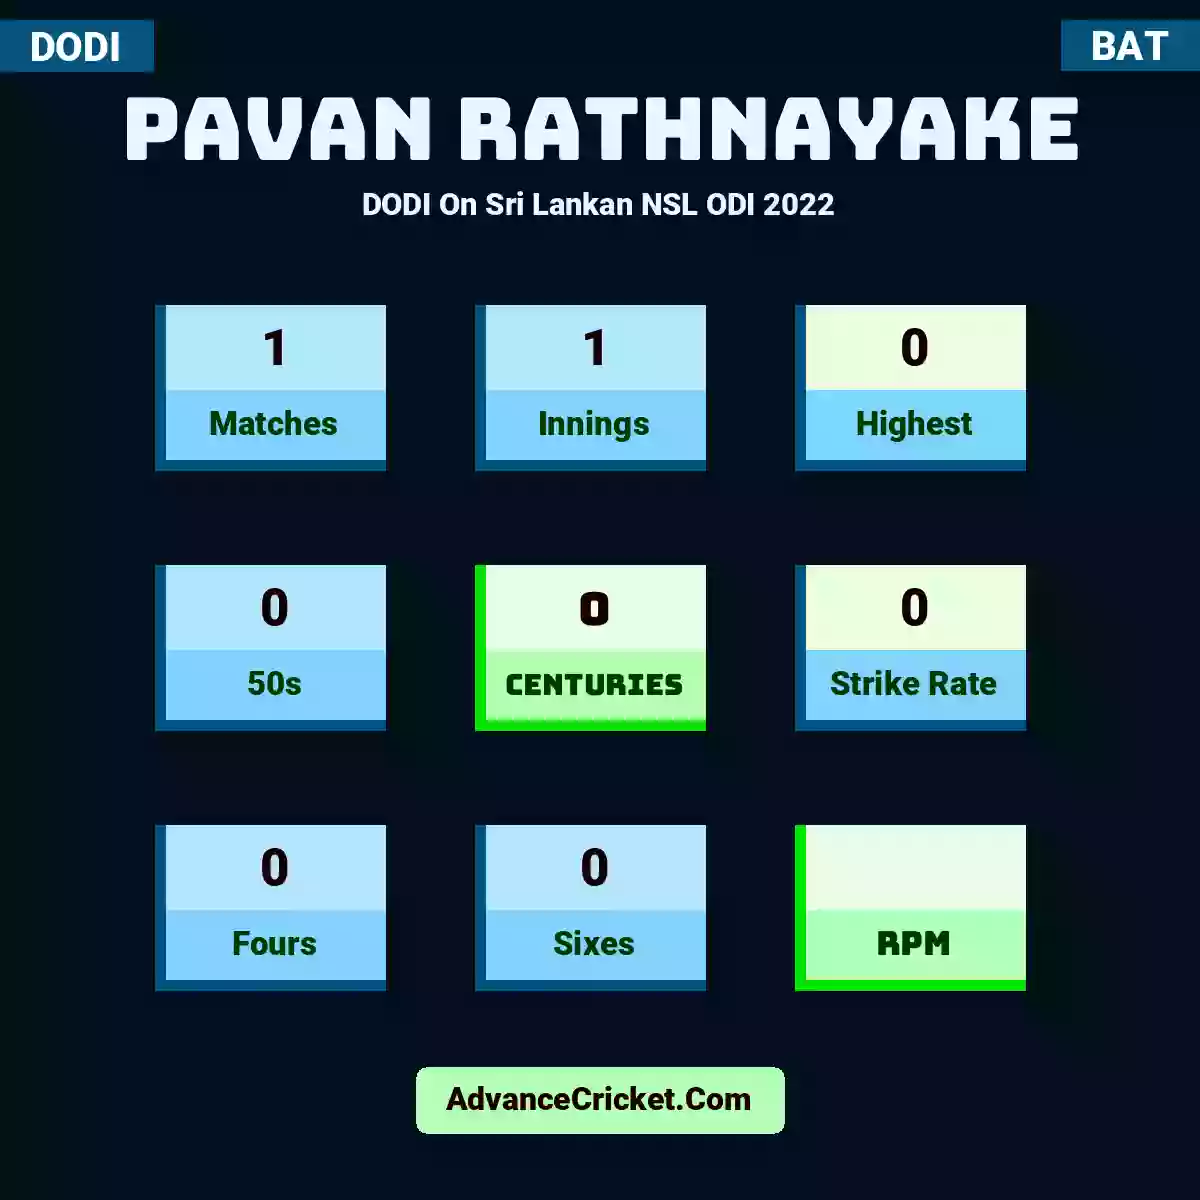 Pavan Rathnayake DODI  On Sri Lankan NSL ODI 2022, Pavan Rathnayake played 1 matches, scored 0 runs as highest, 0 half-centuries, and 0 centuries, with a strike rate of 0. P.Rathnayake hit 0 fours and 0 sixes.